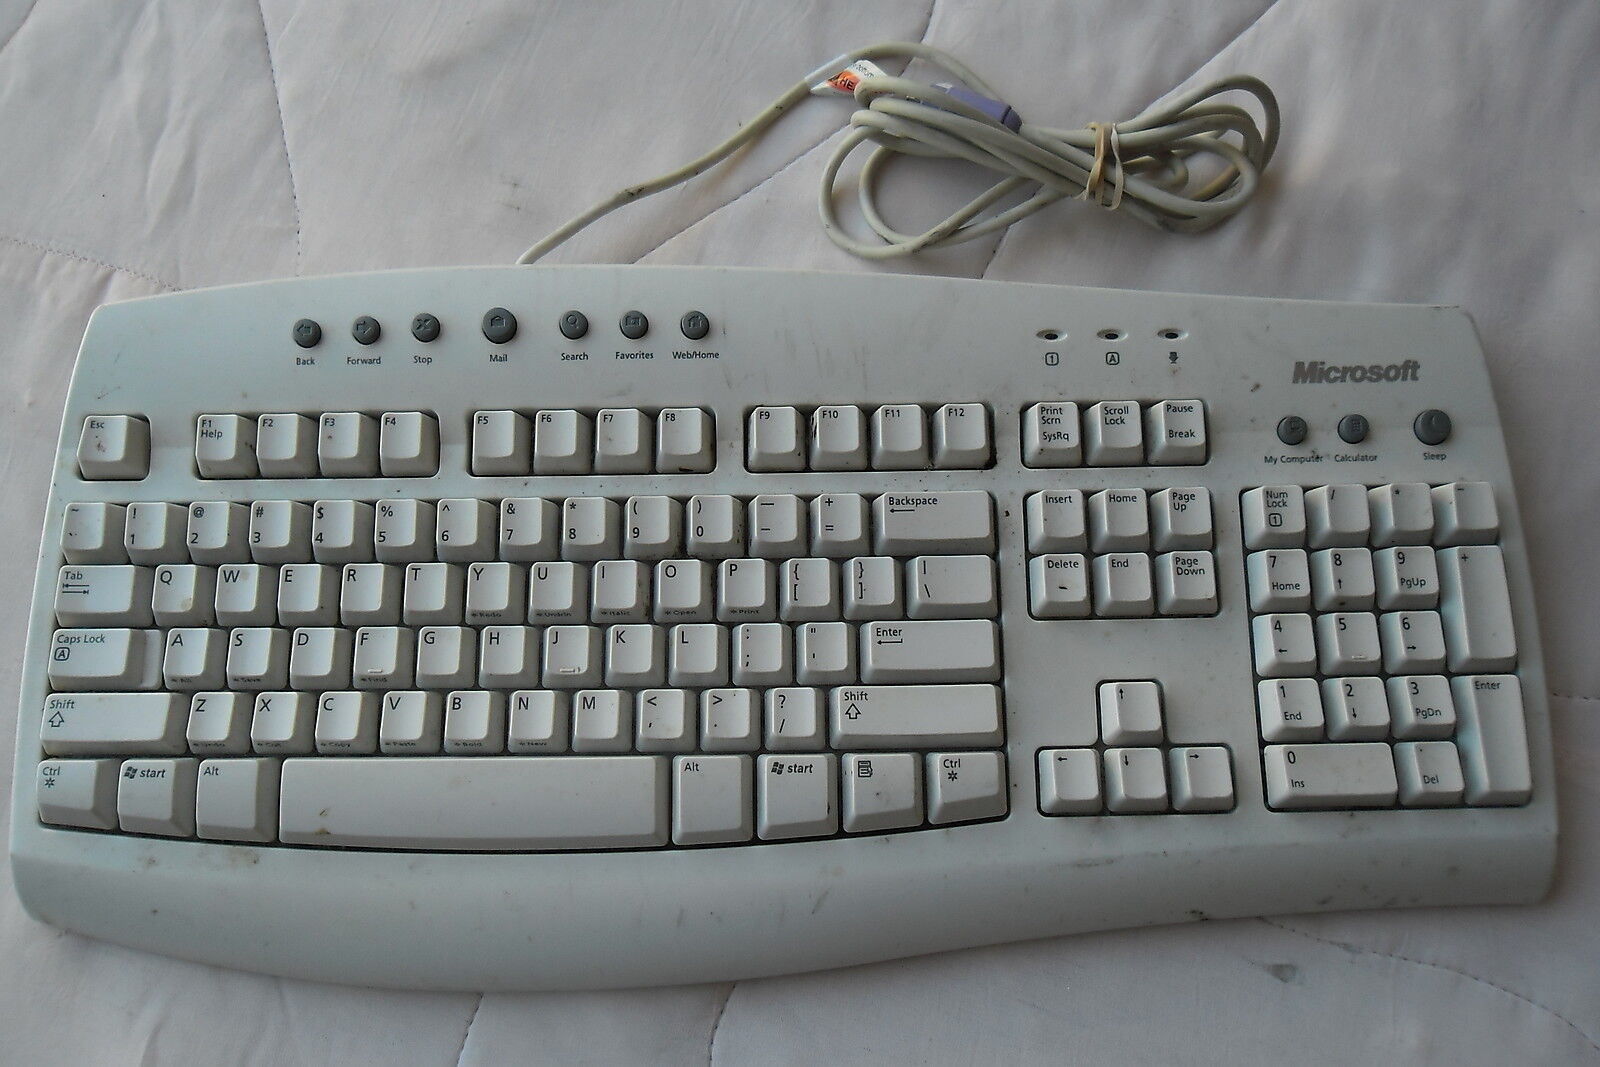 Image 1 - Microsoft Internet Keyboard model Rt9443